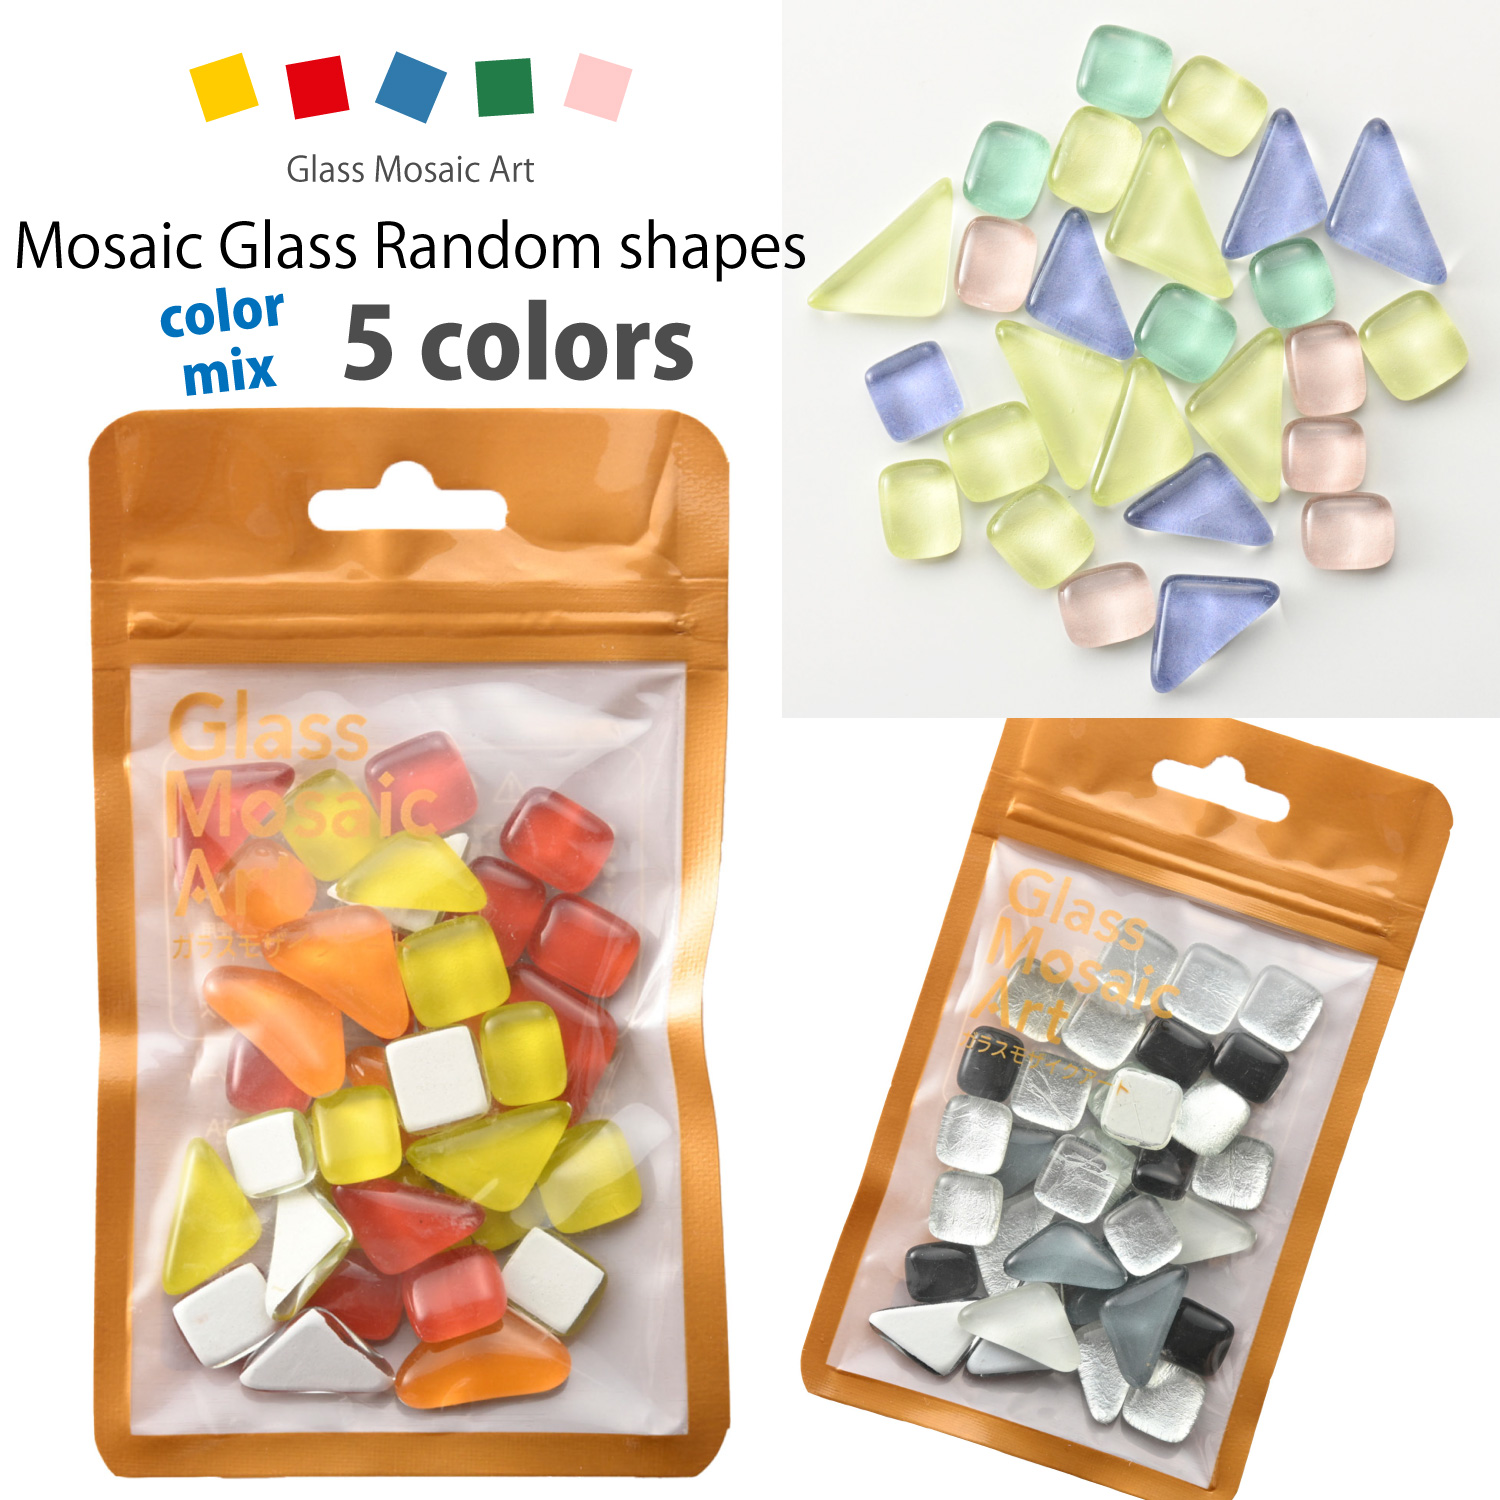 《Glass Mosaic Art》Glass Parts: Random Shapes Color Mix (Bag)